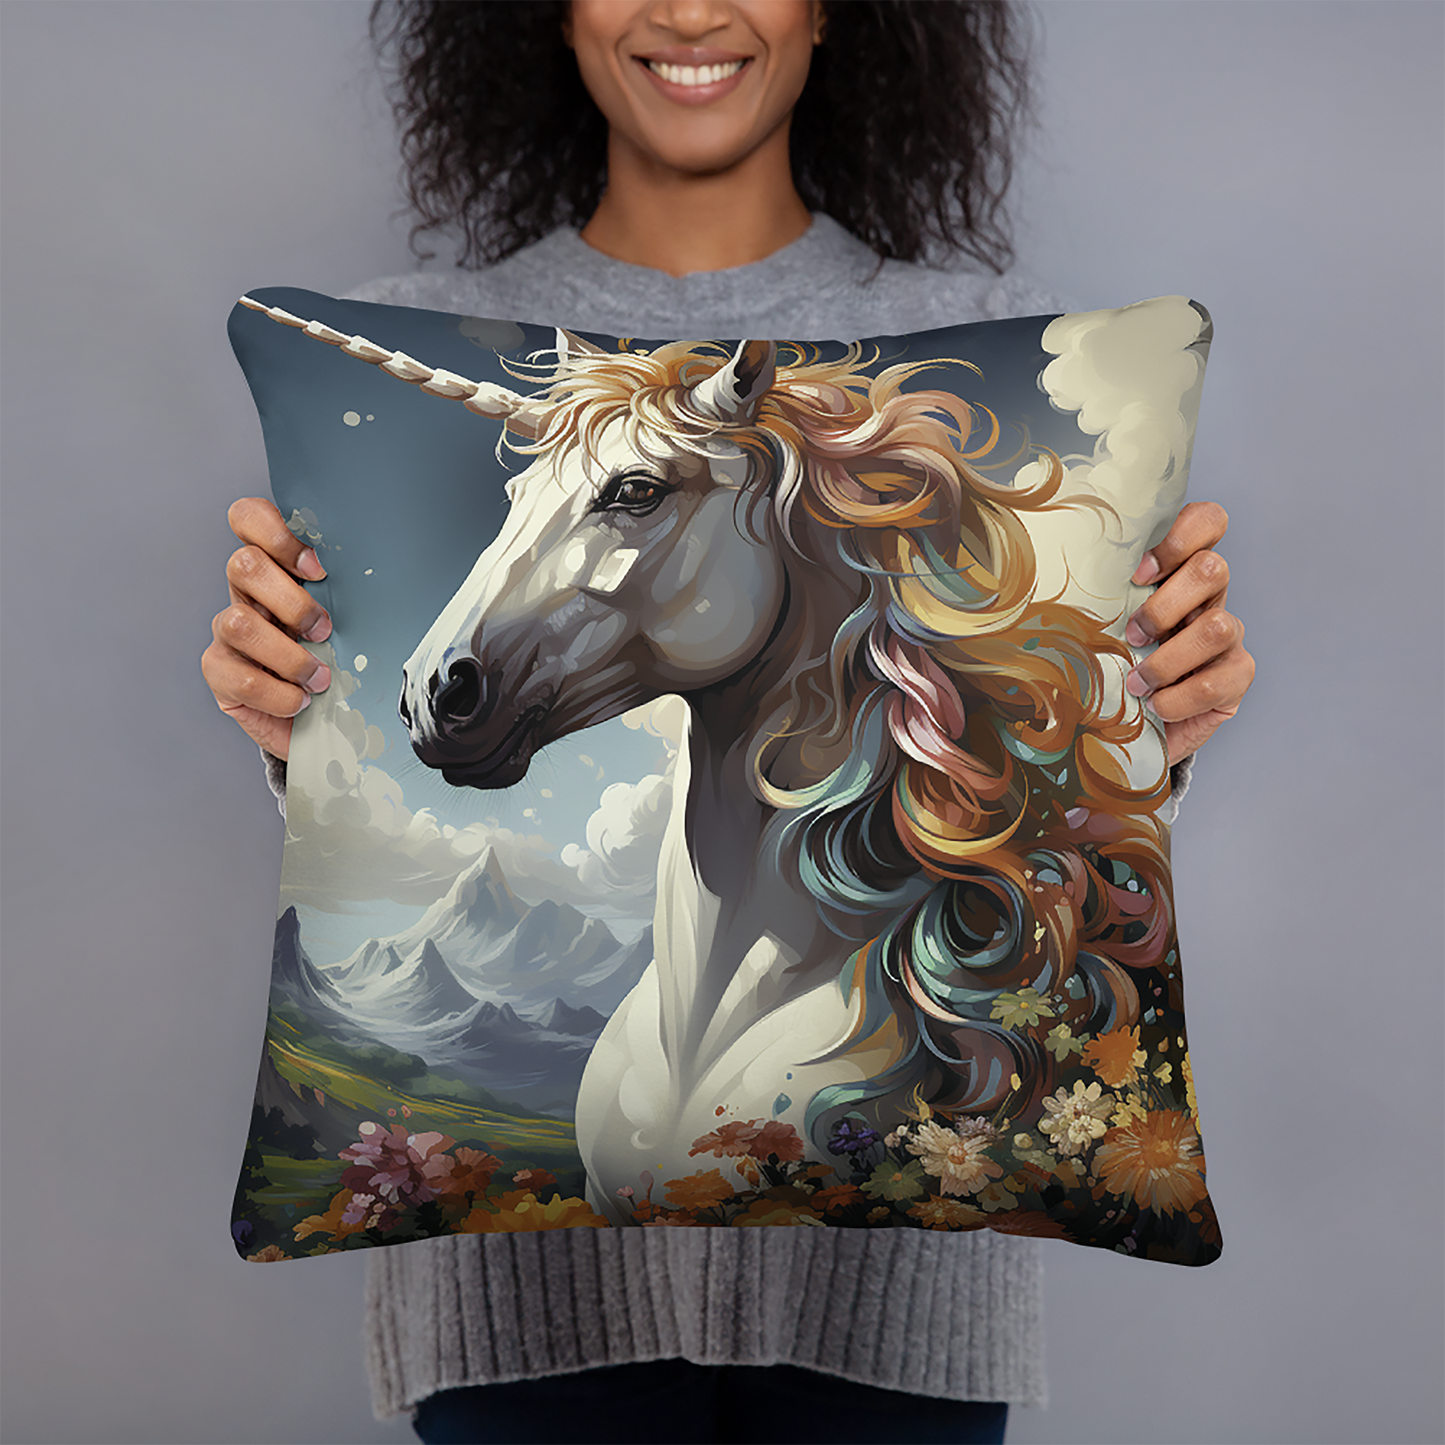 Unicorn Throw Pillow Garden Splendor Polyester Decorative Cushion 18x18